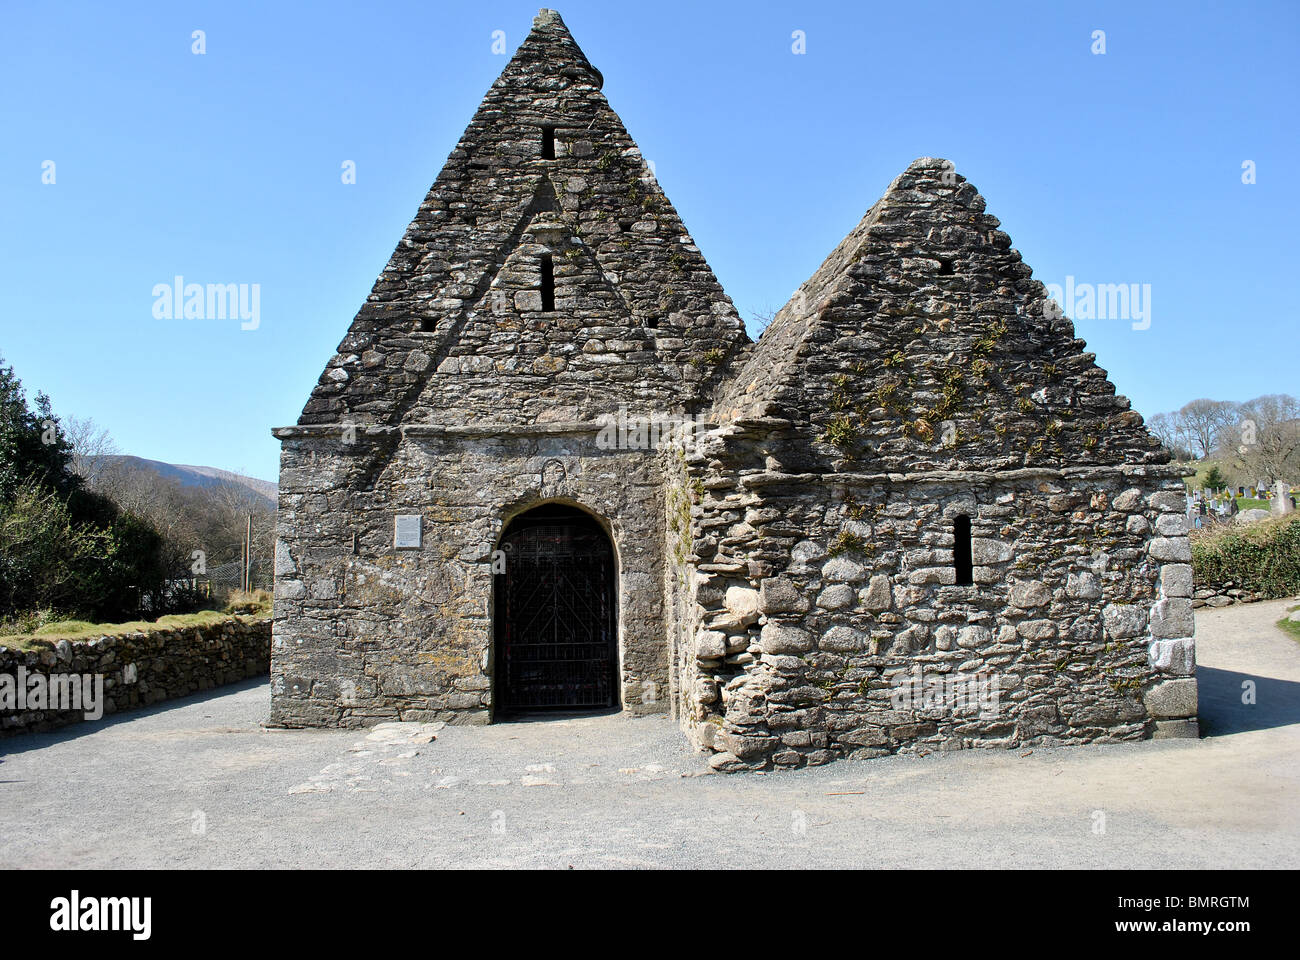 Antica chiesa di glendalough una attrazione turistica Foto Stock